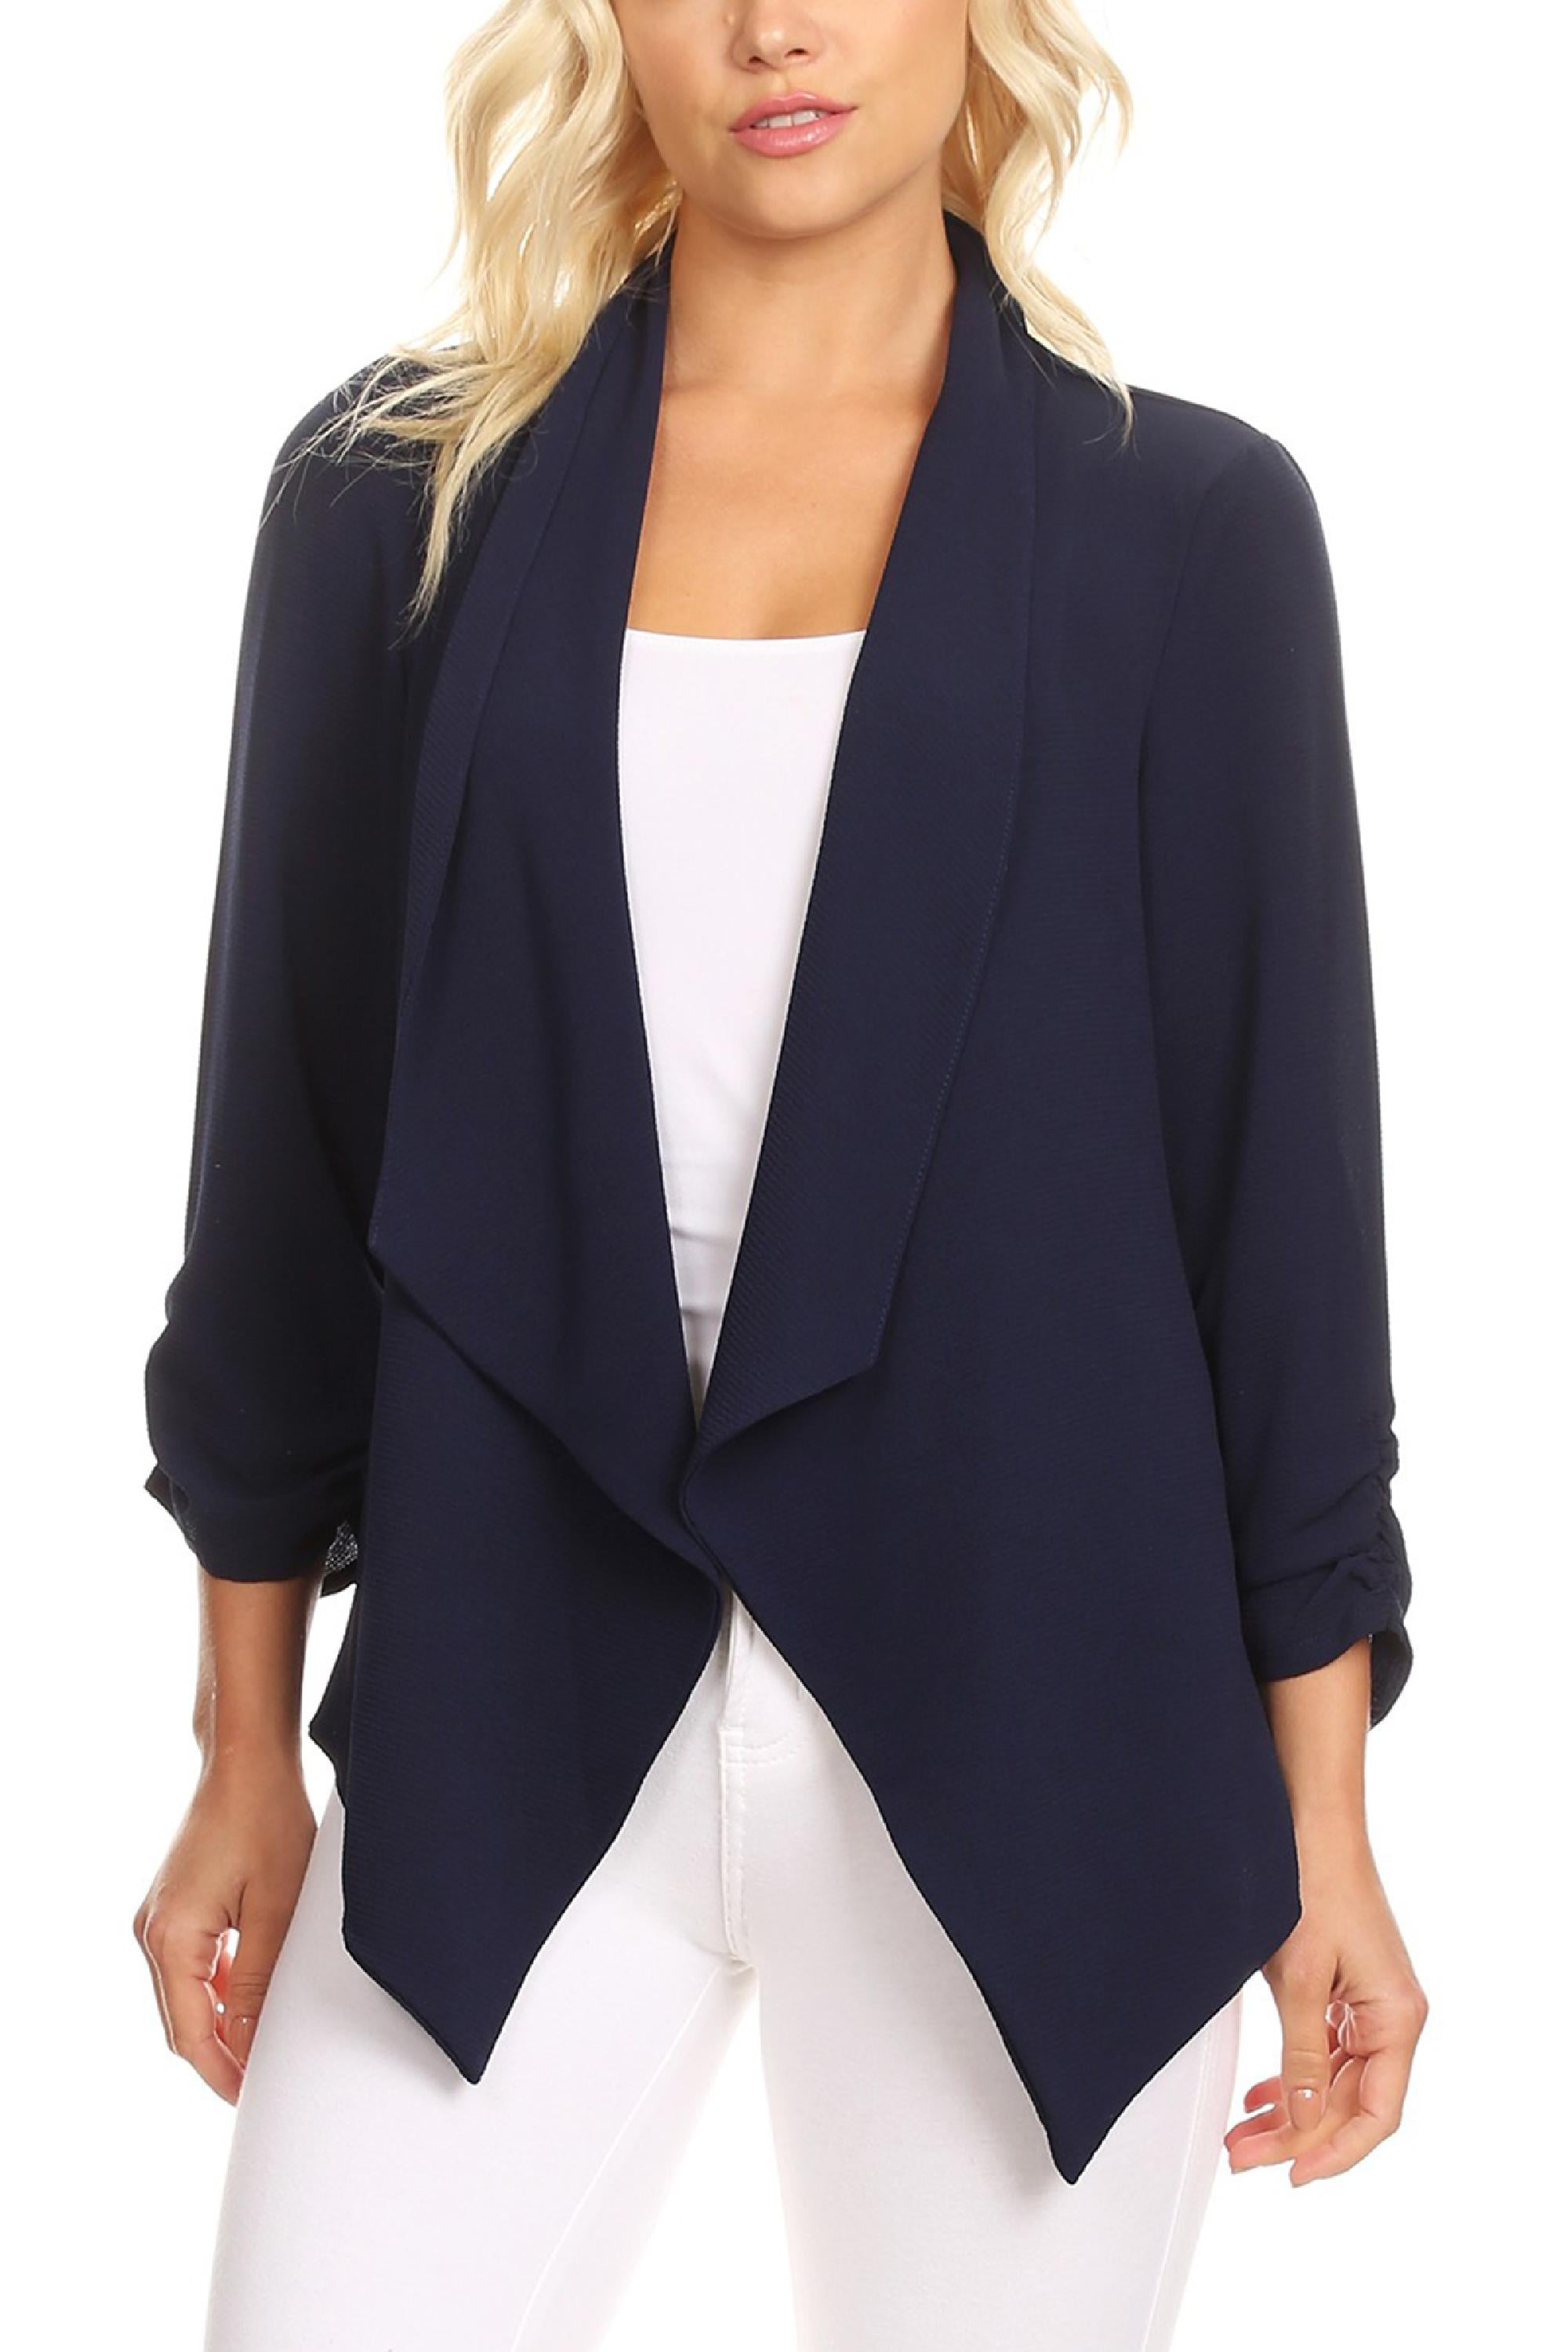 Women 3/4 Sleeve Woven Blazer Open Front Cardigan Jacket Work Office Blazer  Made in USA - Walmart.com